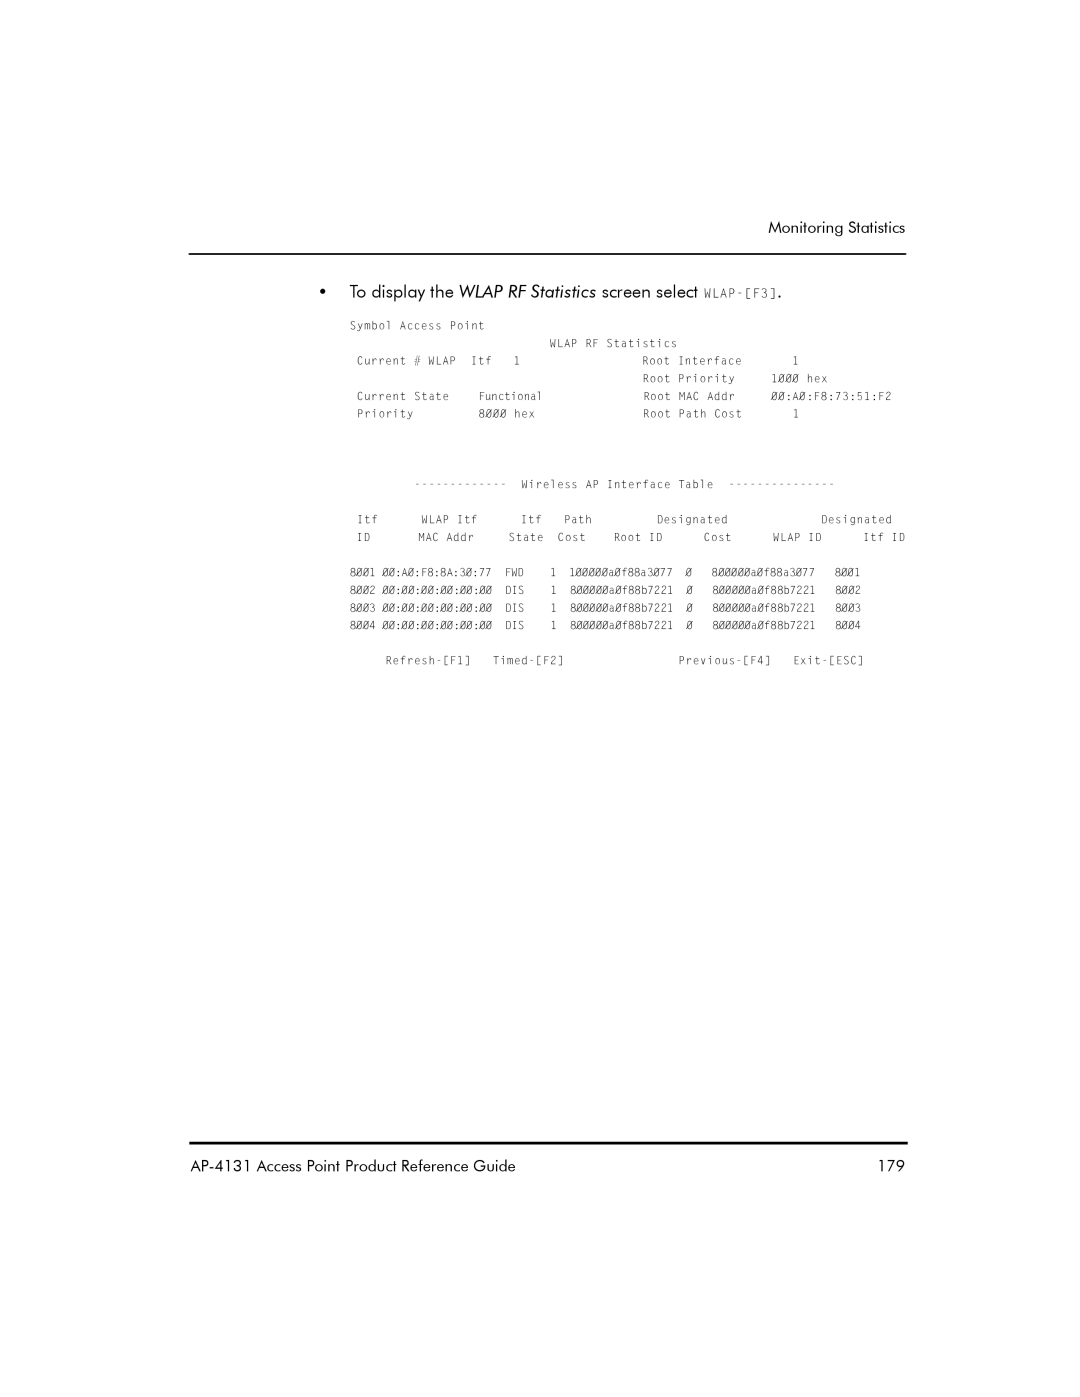 Symbol Technologies AP-4131 manual To display the Wlap RF Statistics screen select WLAP-F3 